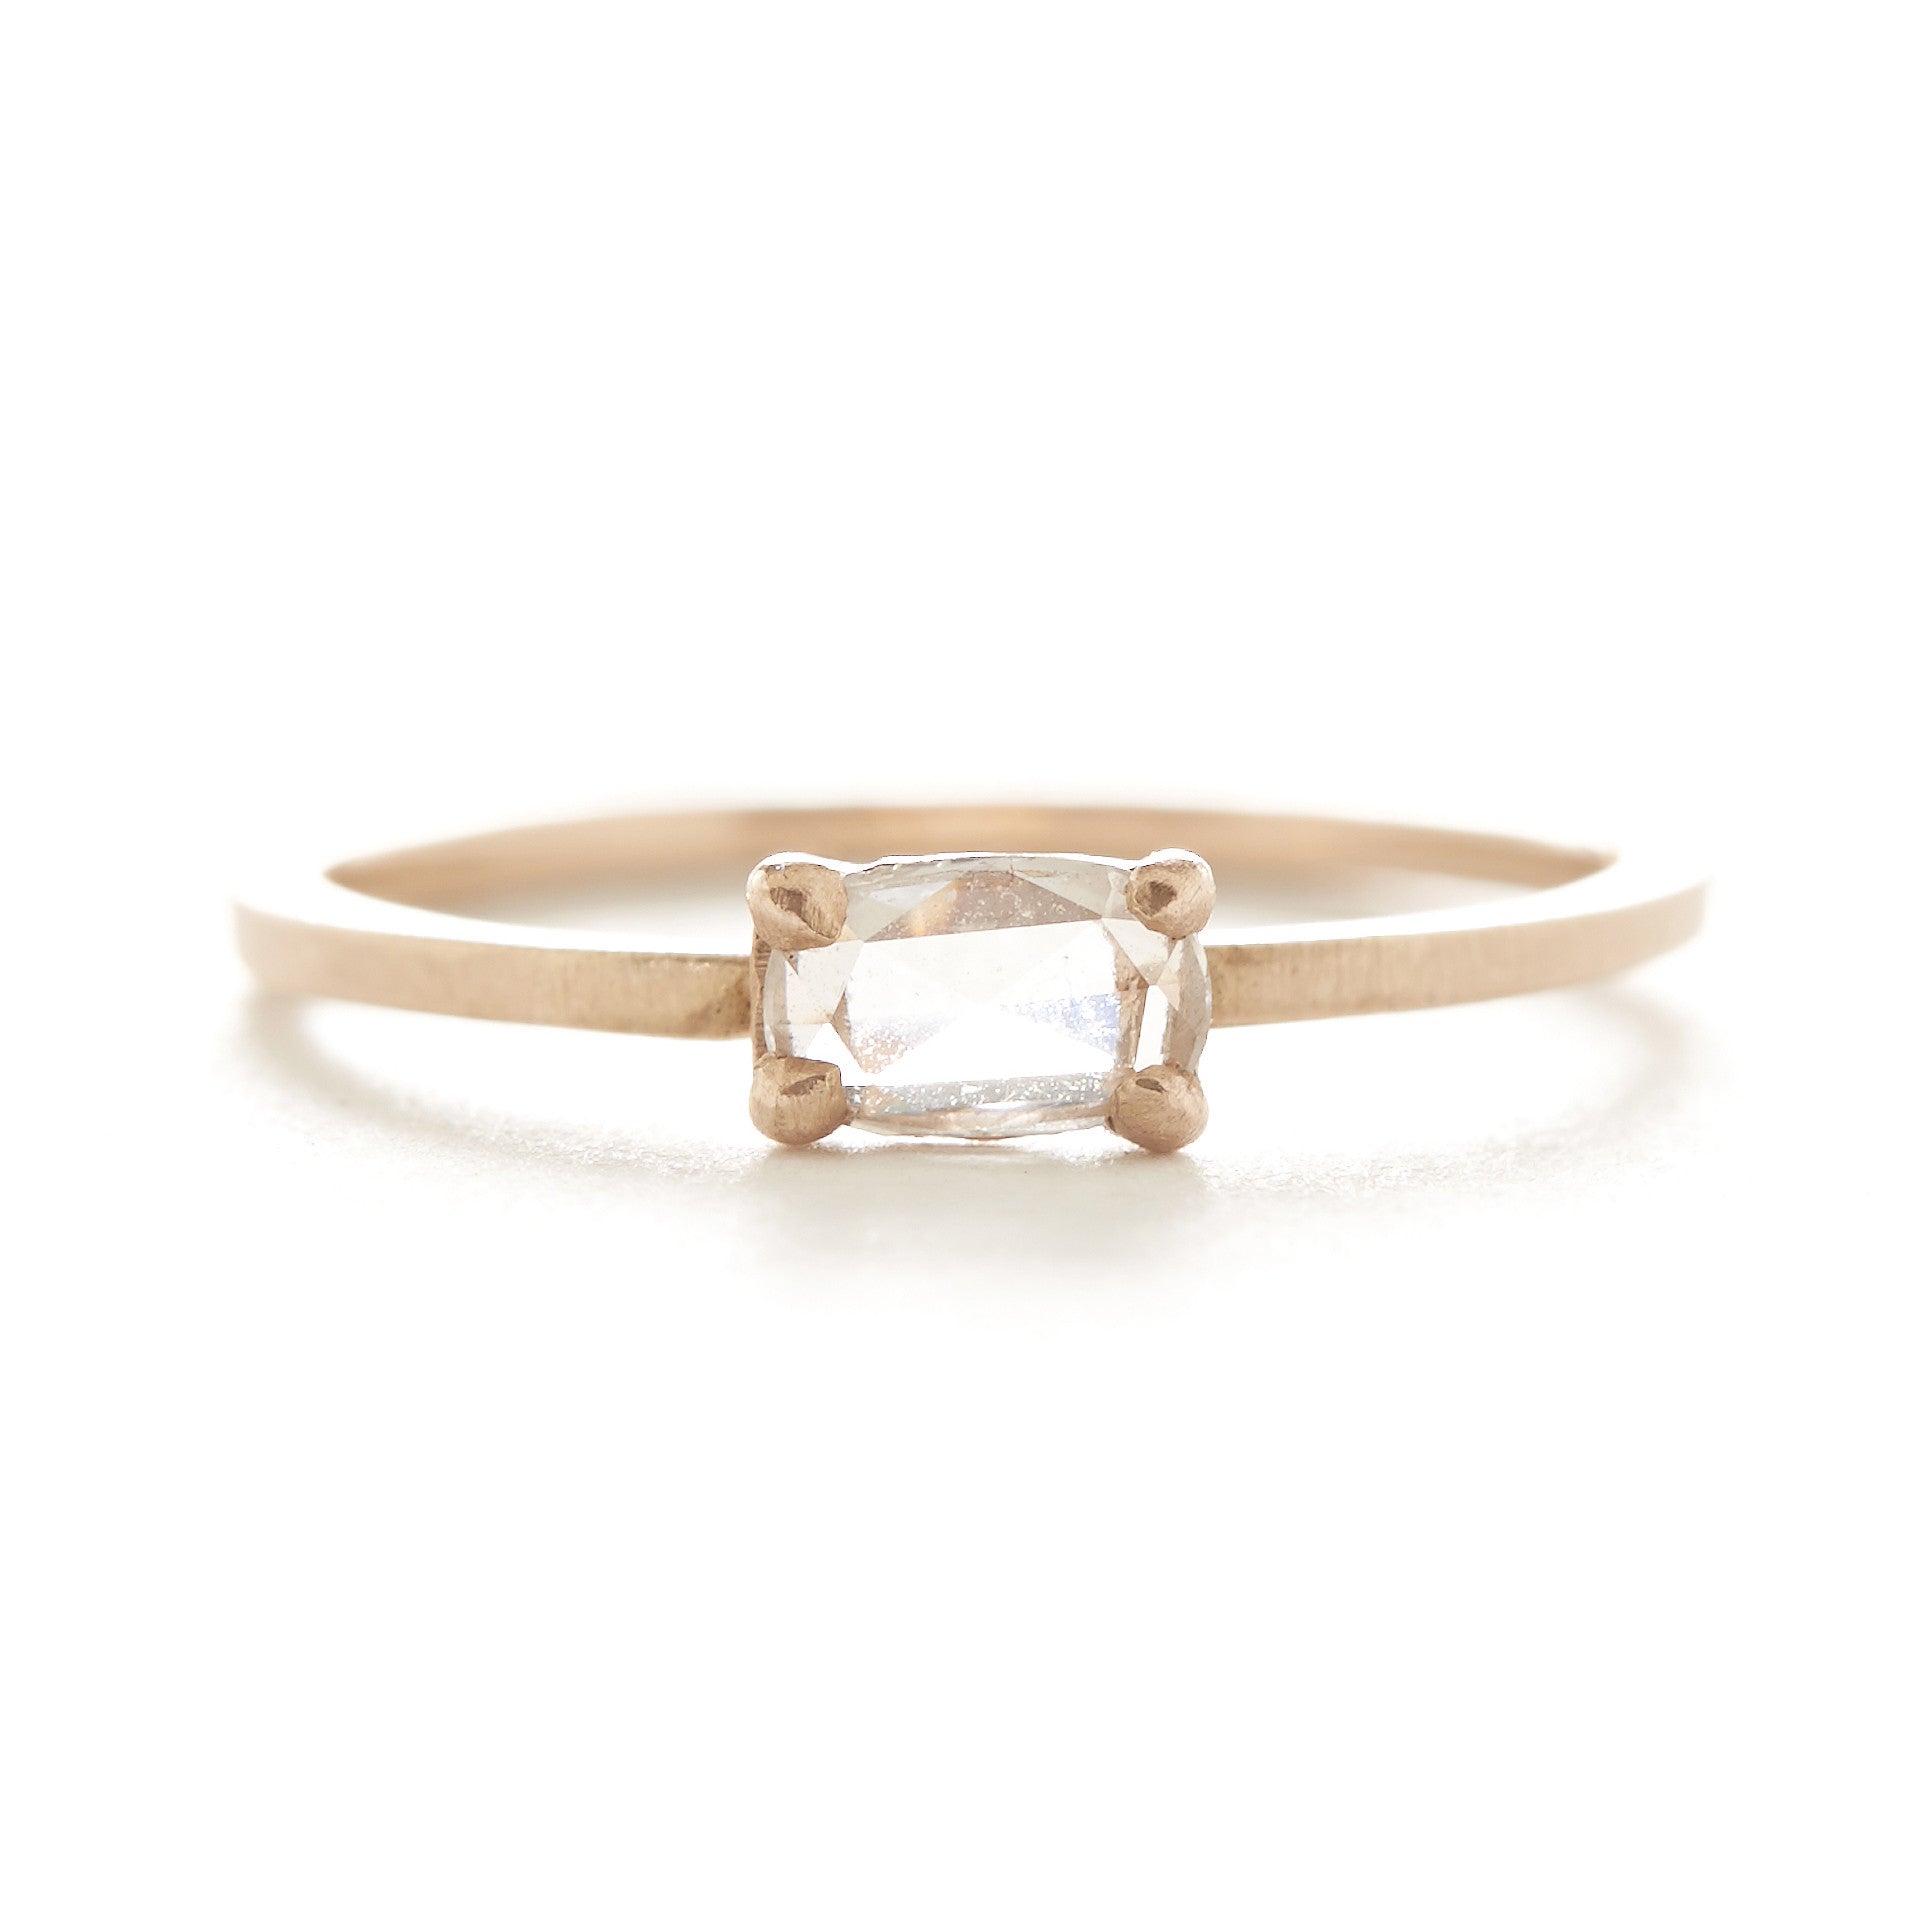 Single Band of Diamonds Surround Round Diamond Halo in 14k White Gold  Bridal Engagement Ring Setting - Diamond & Design